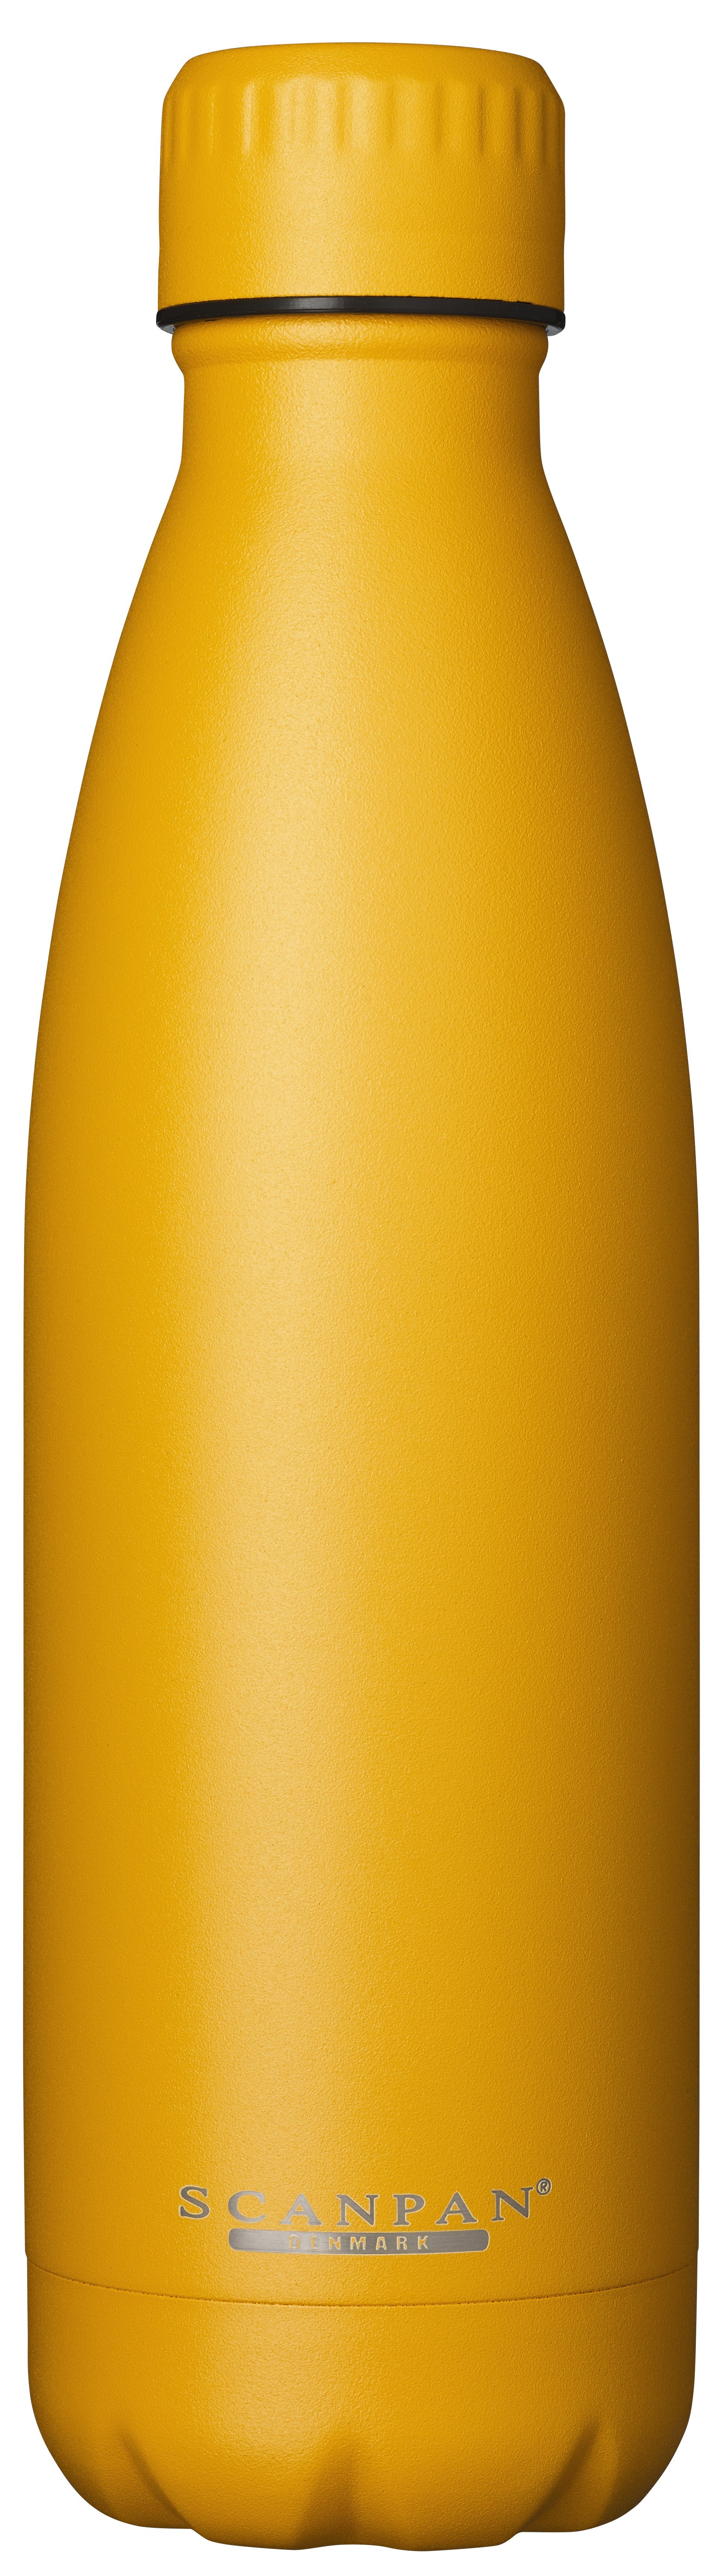 Scanpan - 500ml To Go Vacuum Bottle - Golden Yellow